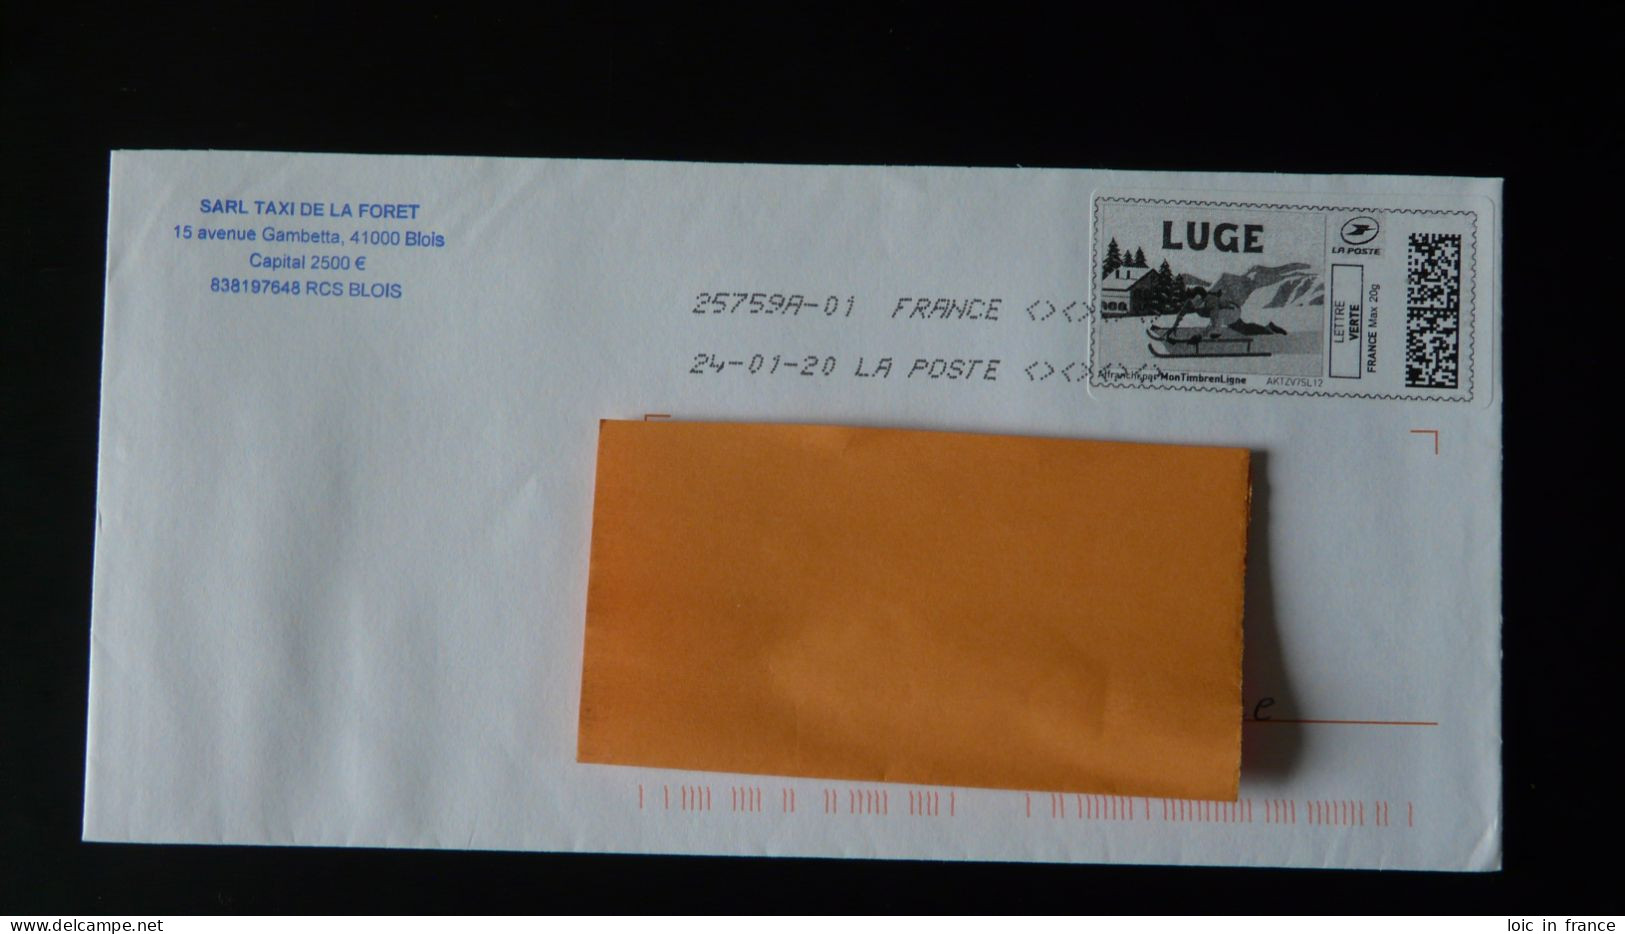 Luge Timbre En Ligne Montimbrenligne Sur Lettre (e-stamp On Cover) Ref TPP 5134 - Printable Stamps (Montimbrenligne)